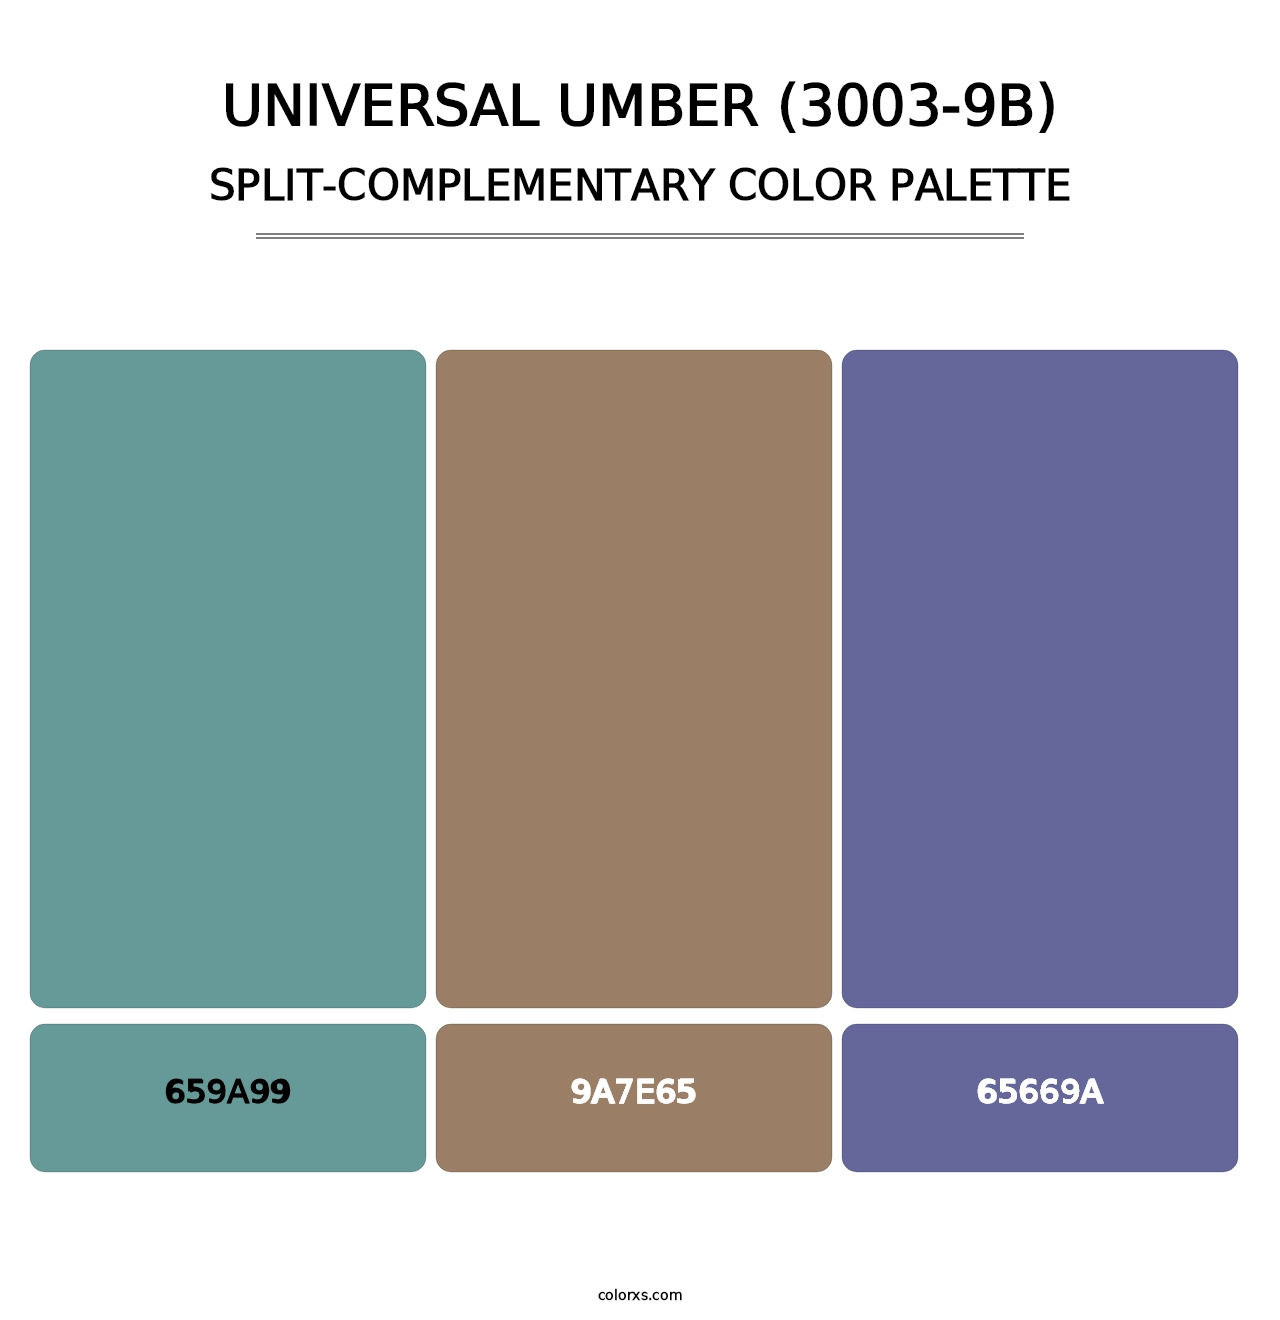 Universal Umber (3003-9B) - Split-Complementary Color Palette